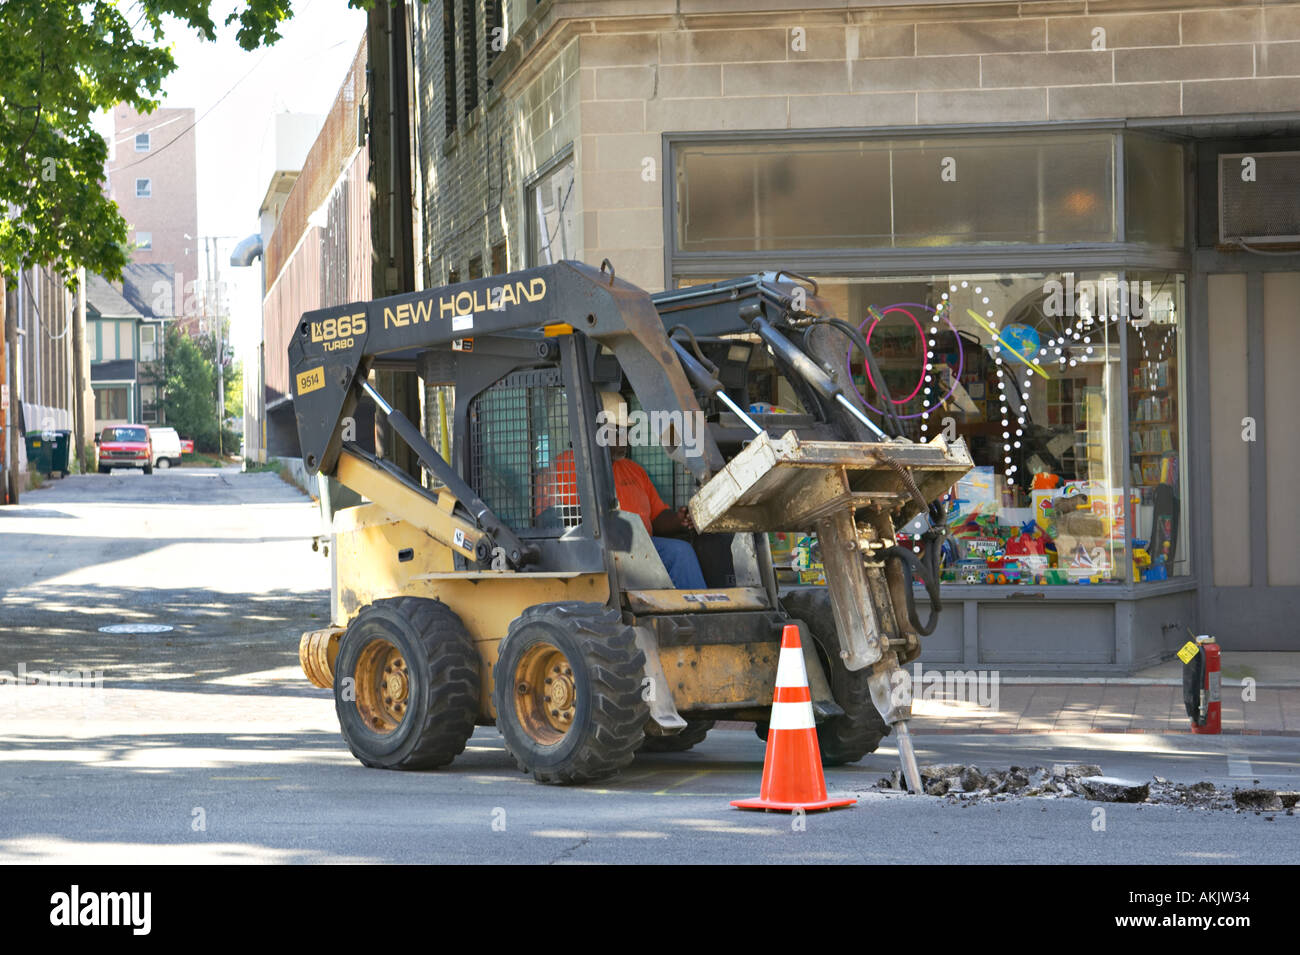 WORKERS Evanston Illinois Man use jackhammer on bobcat to repair section of street orange cone urban retail area Stock Photo